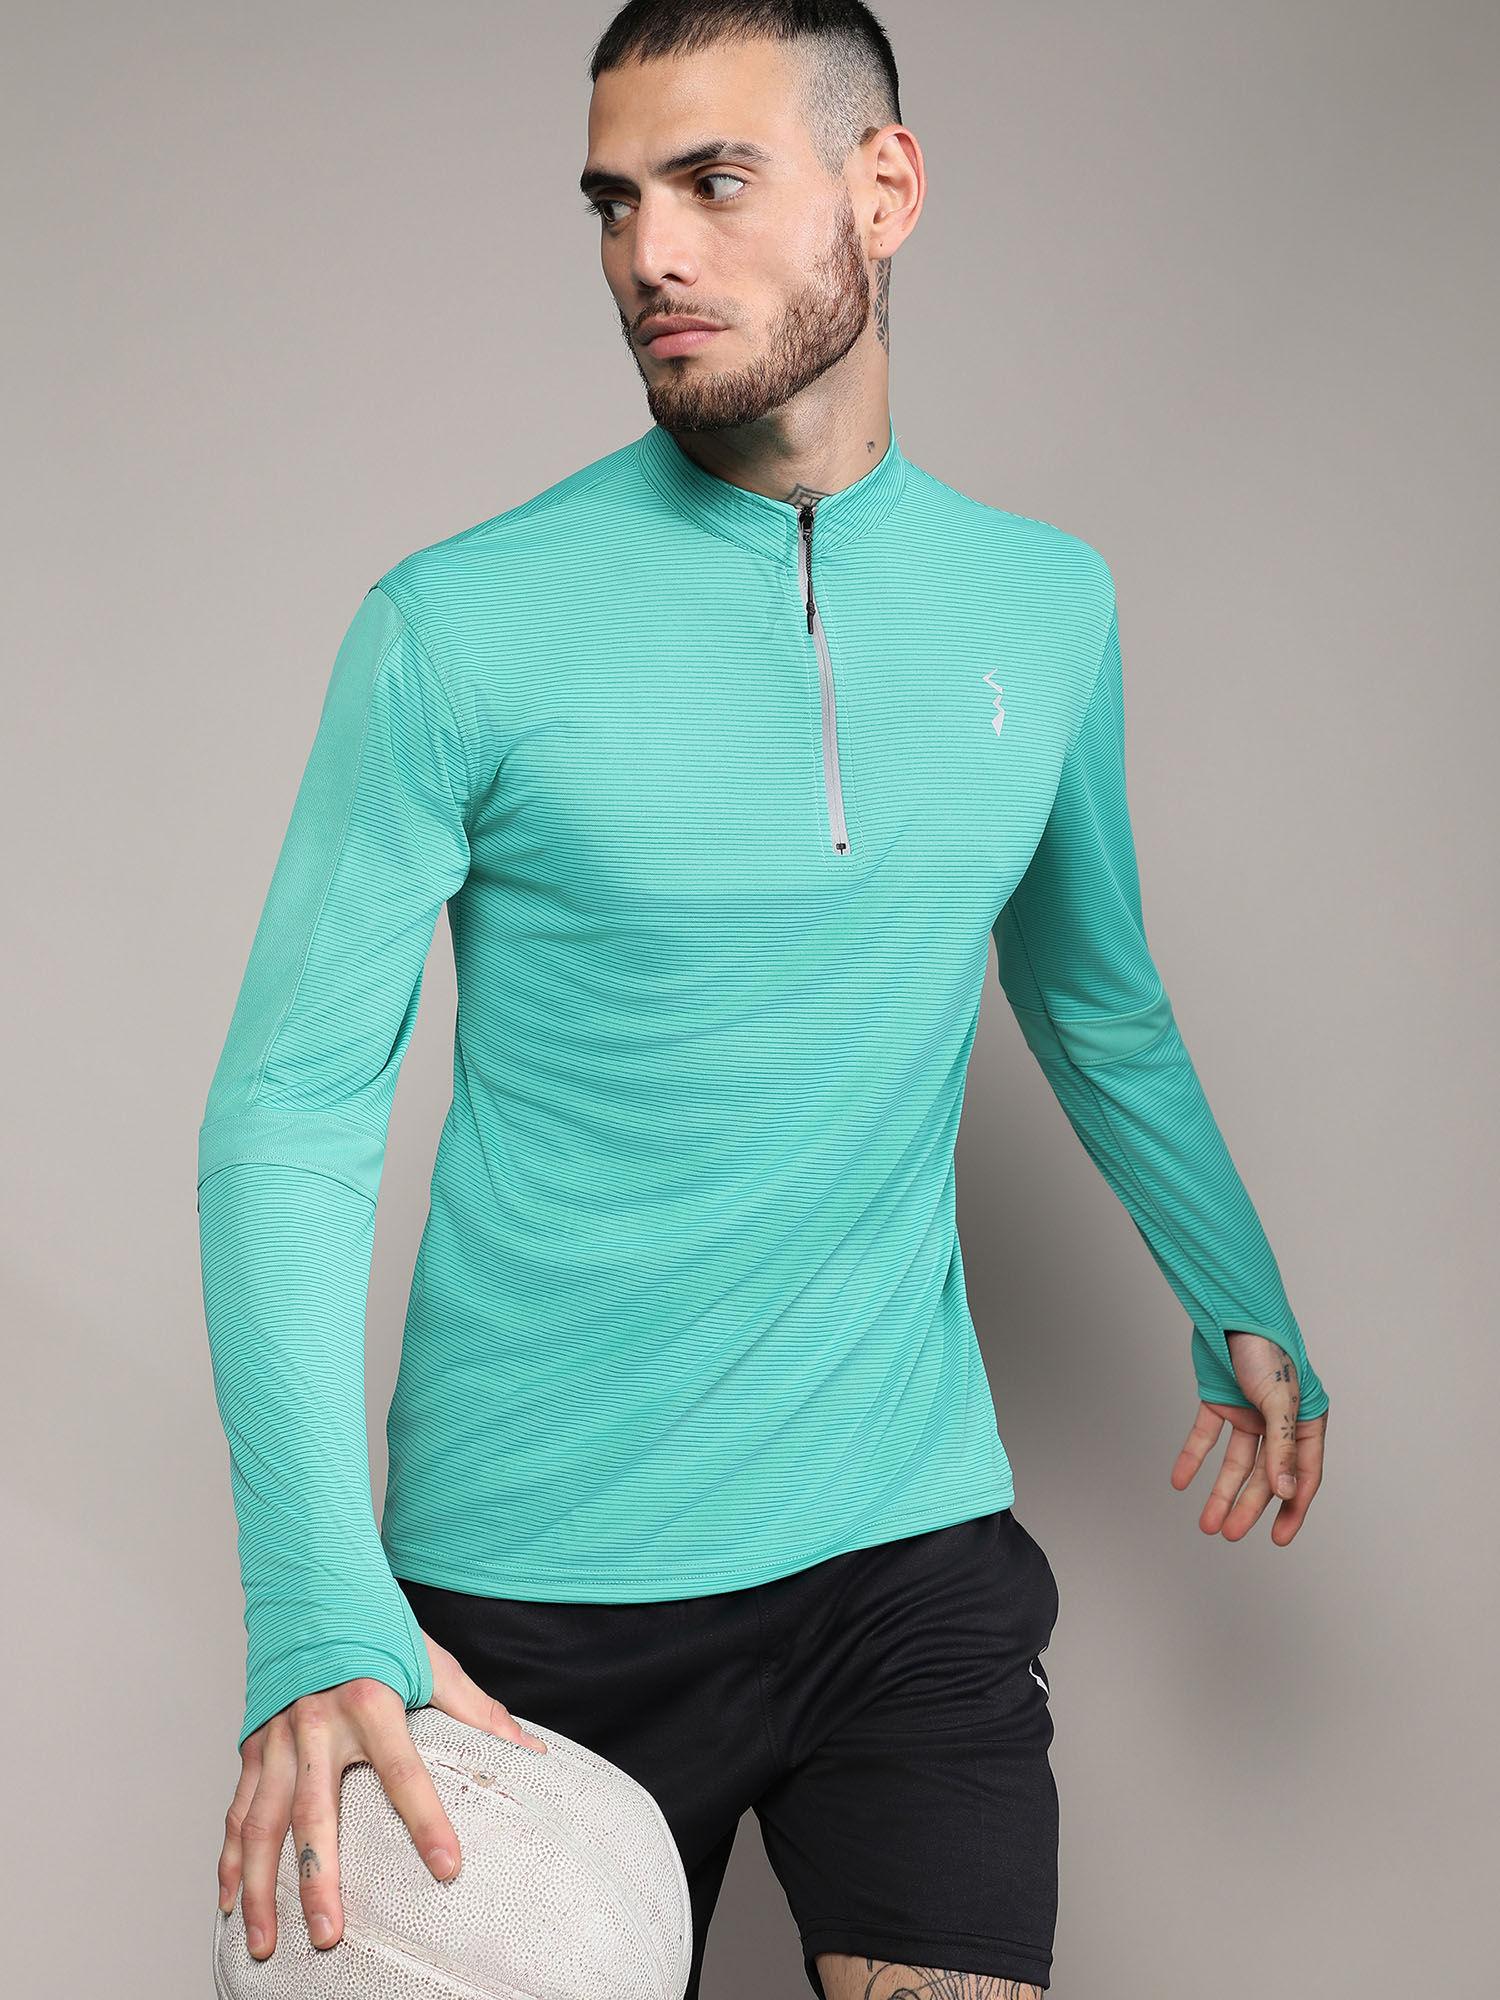 mens mint green basic activewear t-shirt